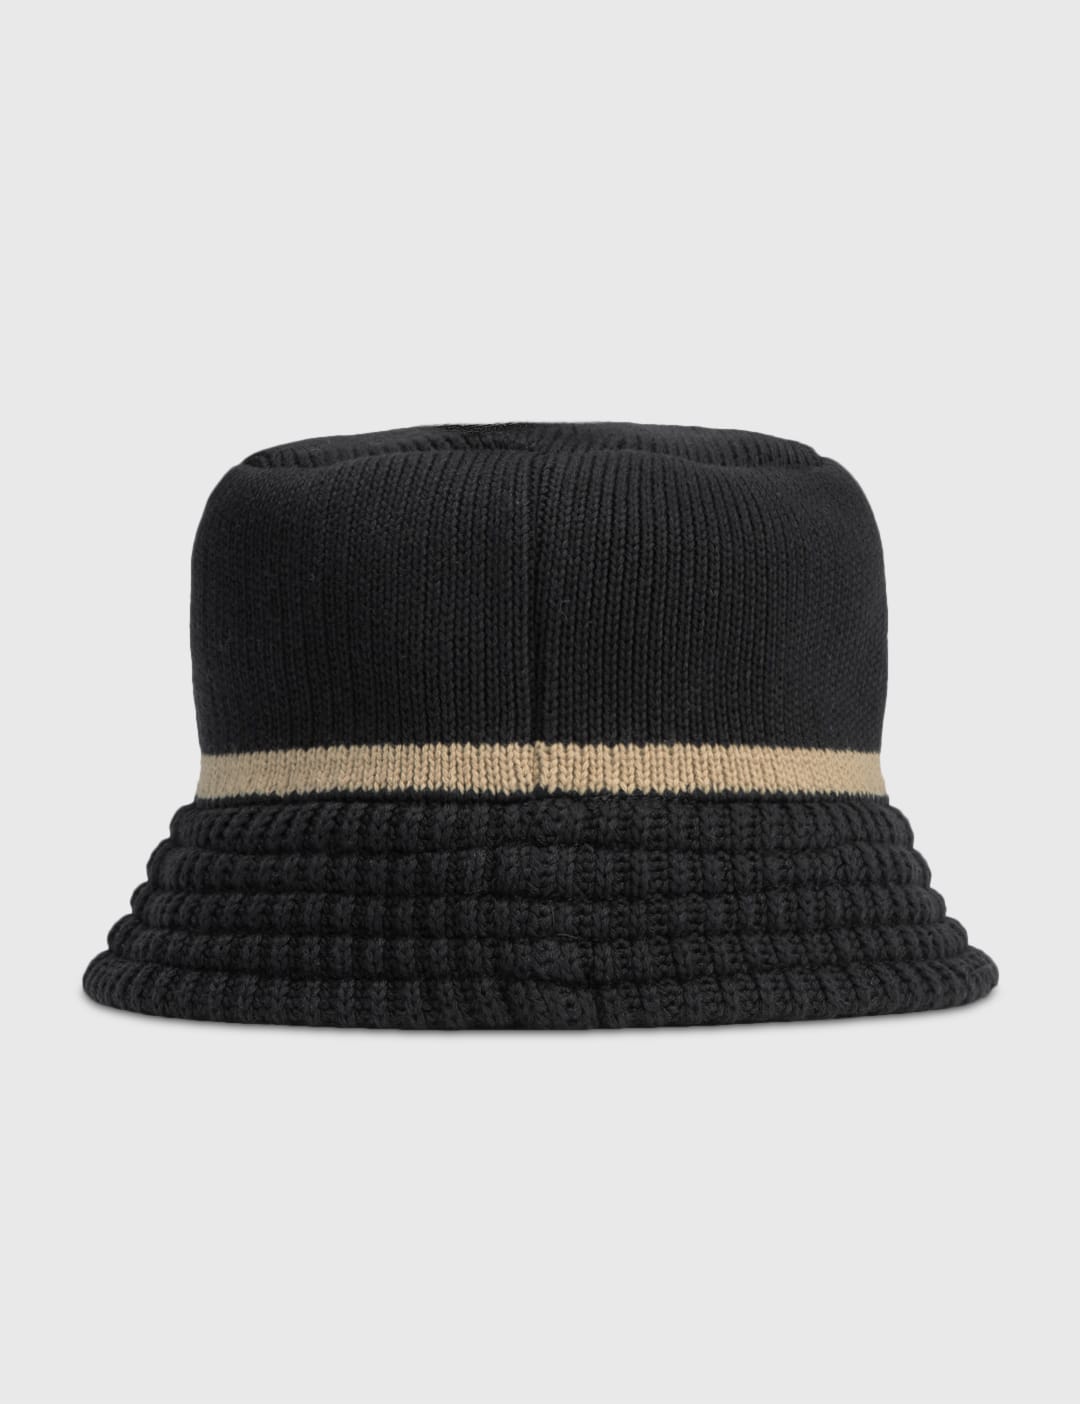 Stüssy - SS Link Knit Bucket Hat | HBX - Globally Curated Fashion